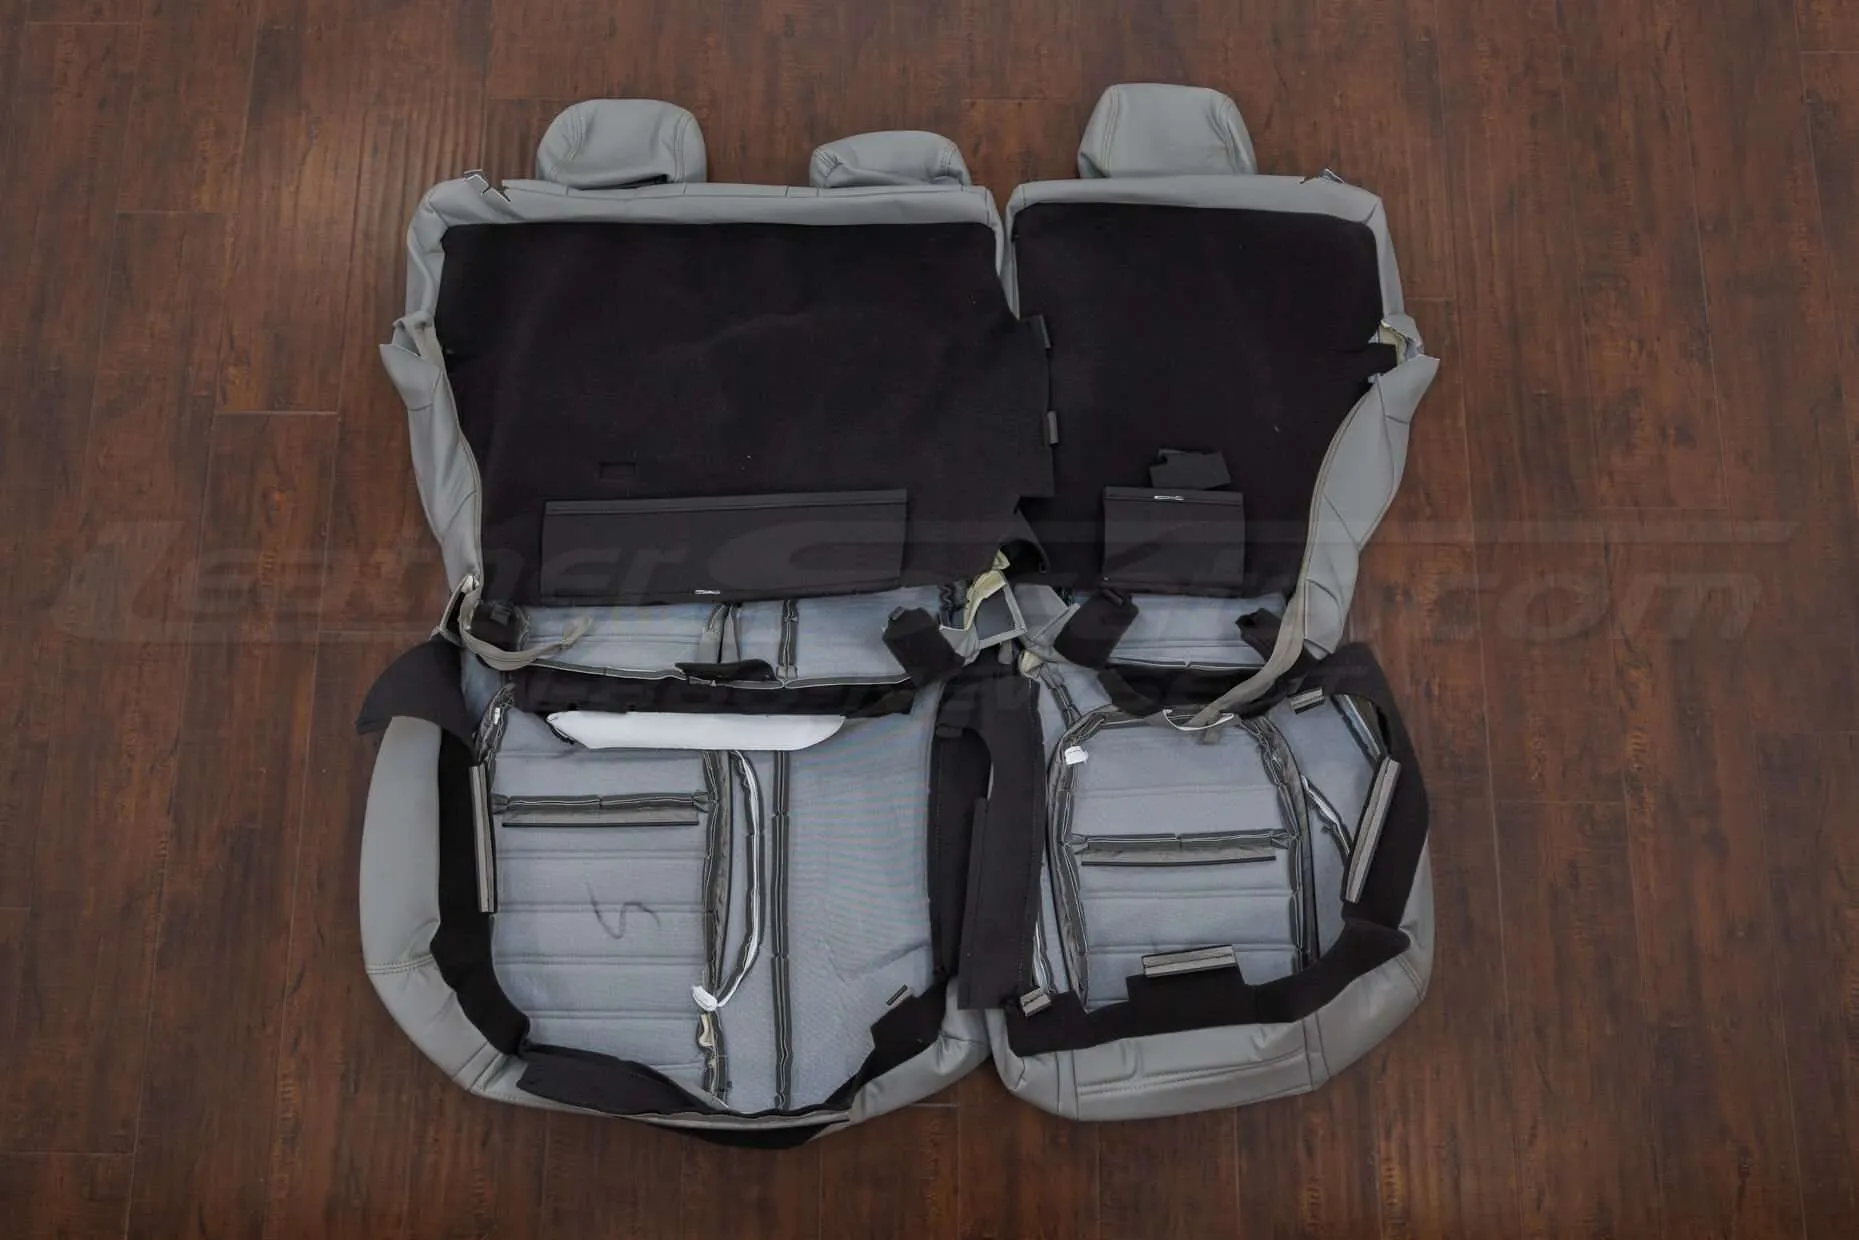 Honda CRV Leather Kit - Ash - Back view of rear seats